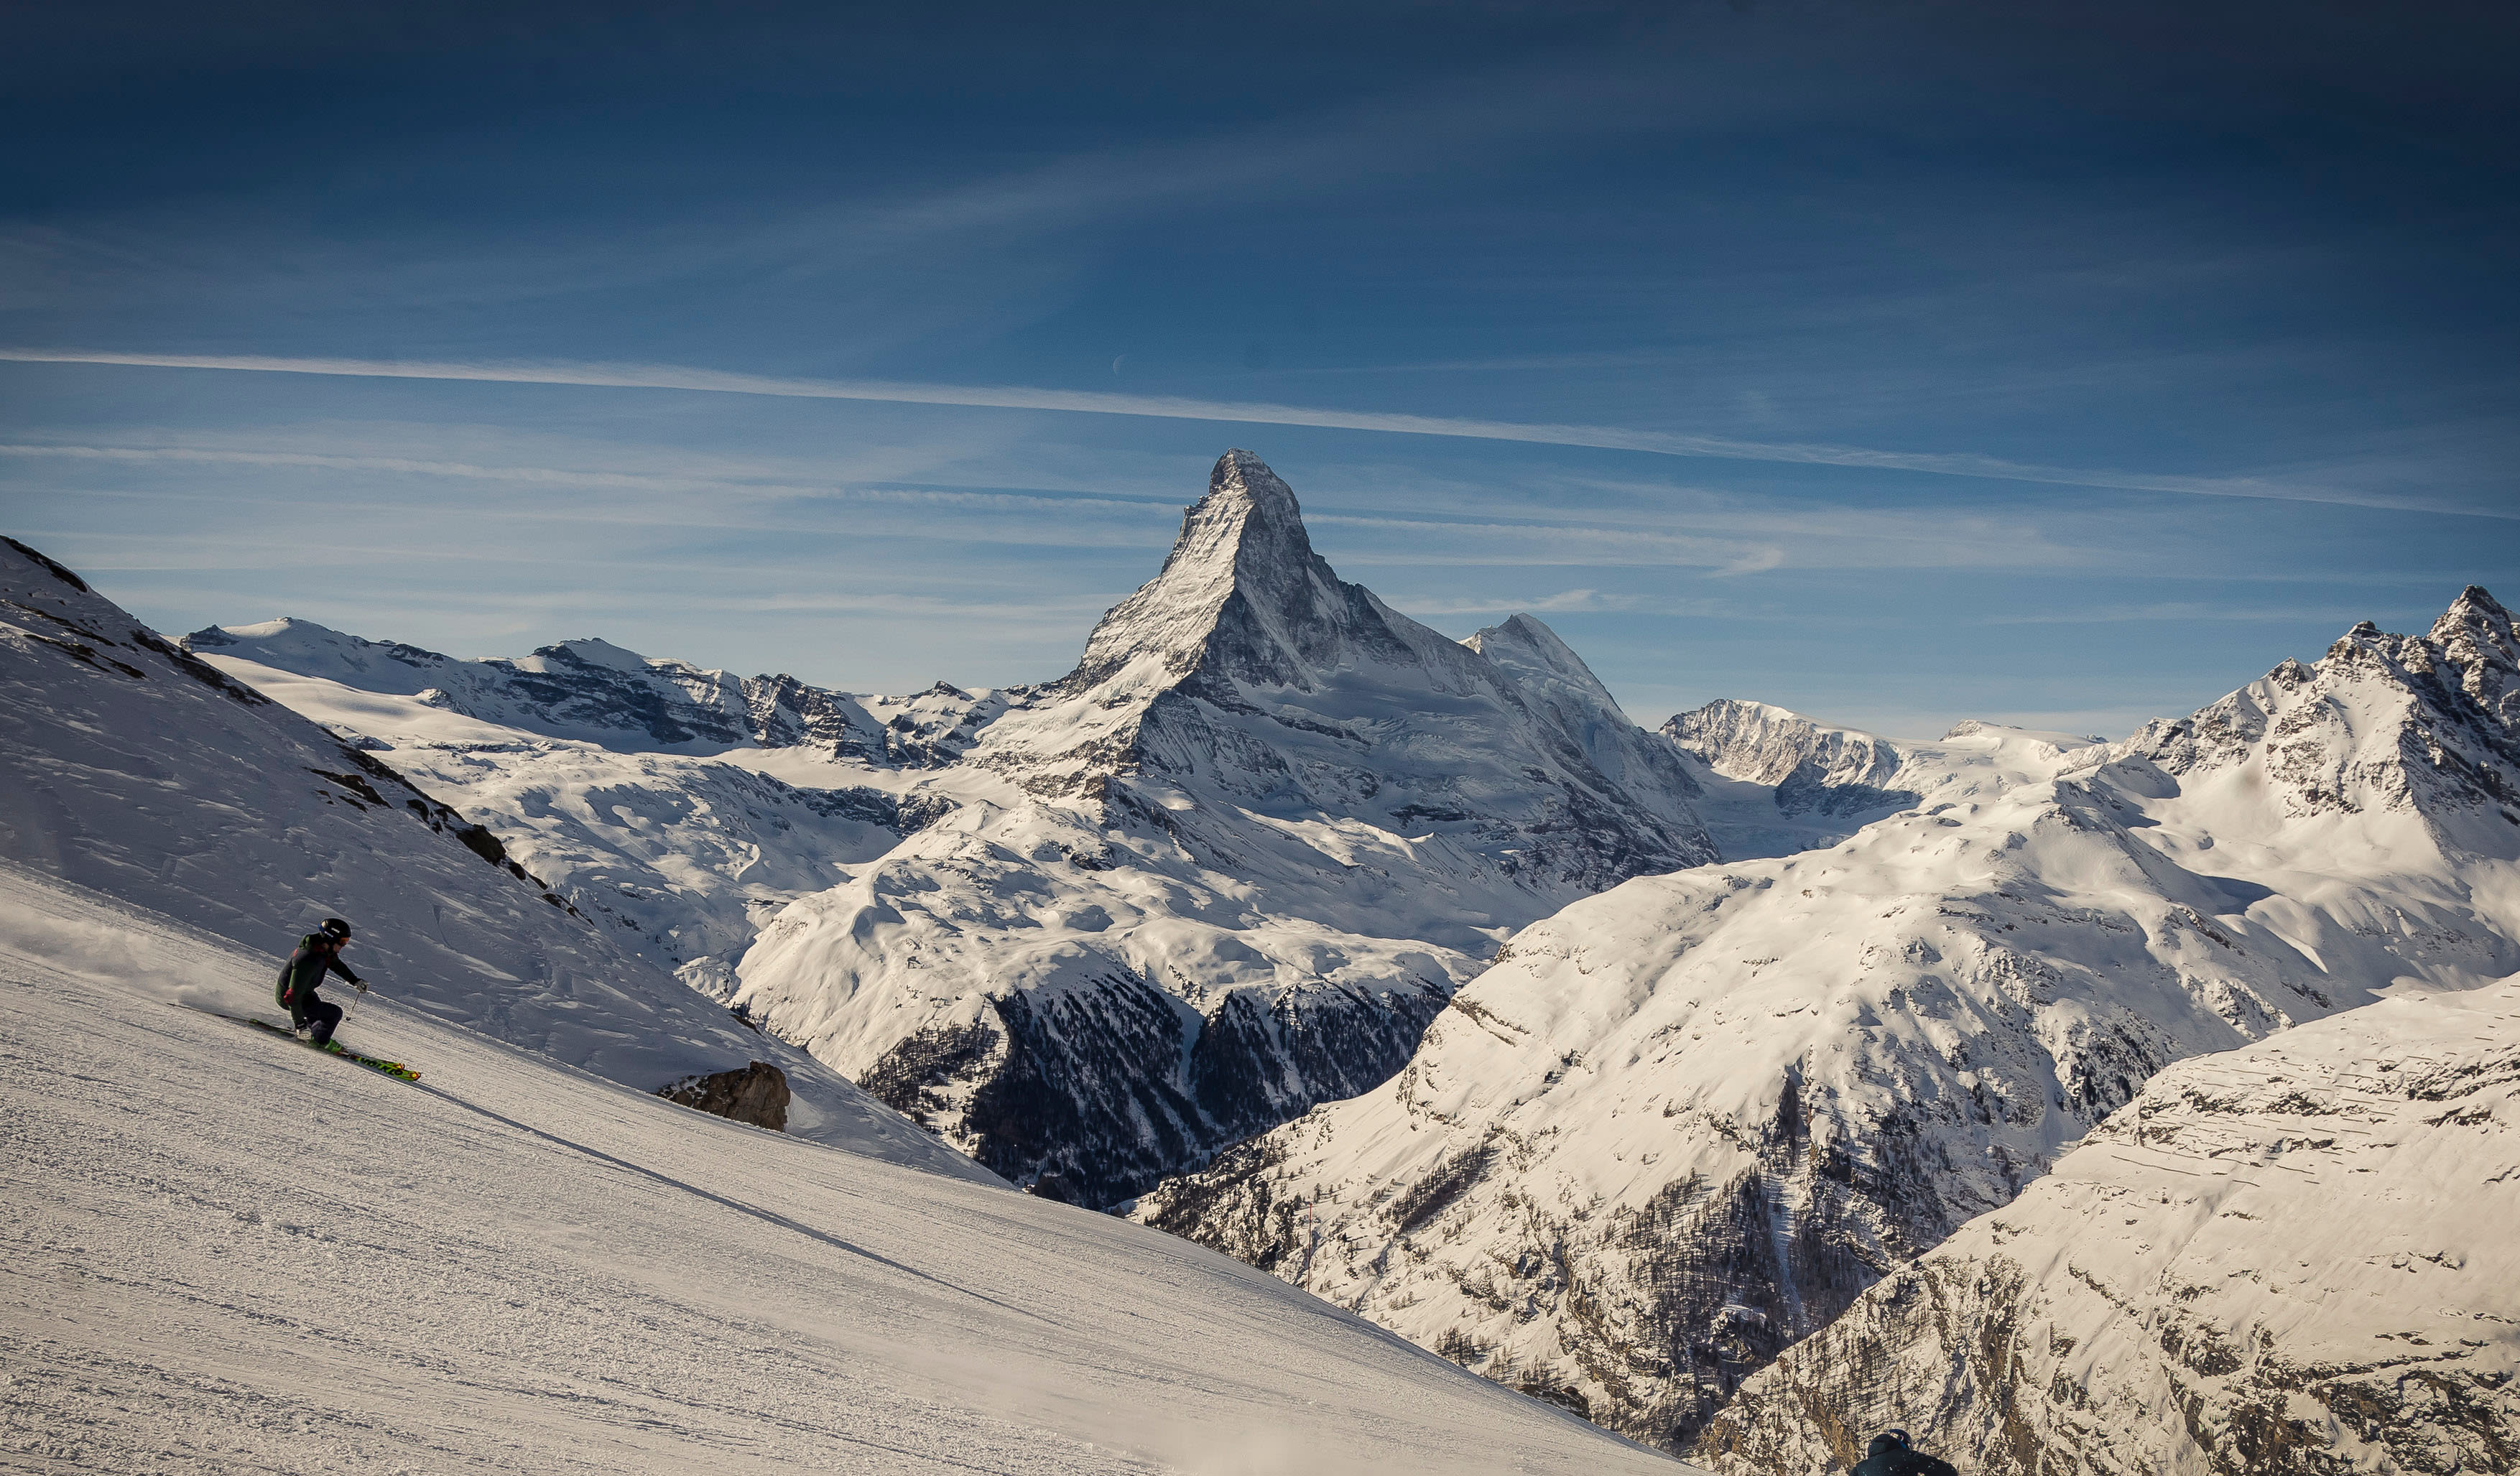 Skiing in Zermatt with a fantastic view of the impressive Matterhorn, Zermatt, winter in Valais, Switzerland